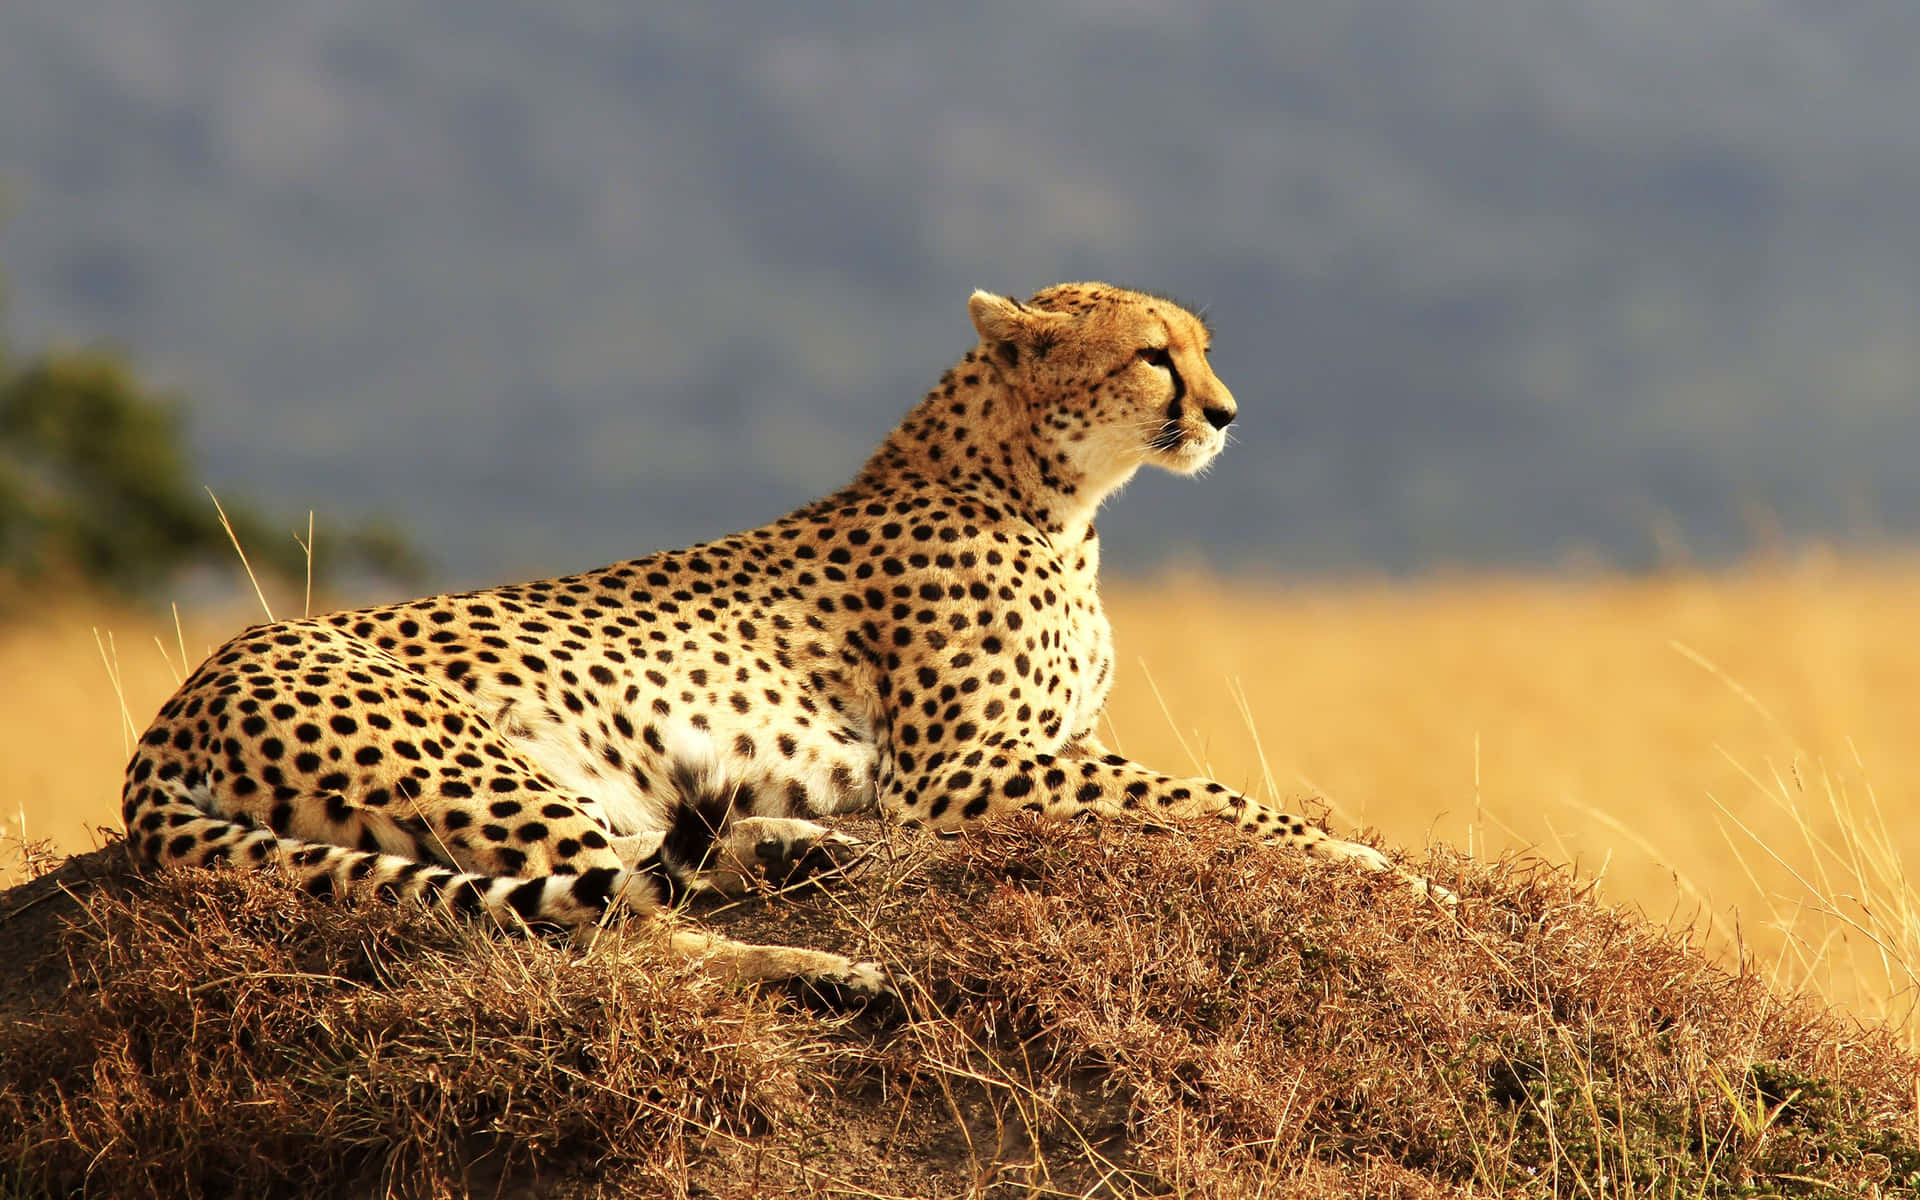 Cheetah sprinting across wide open savannah